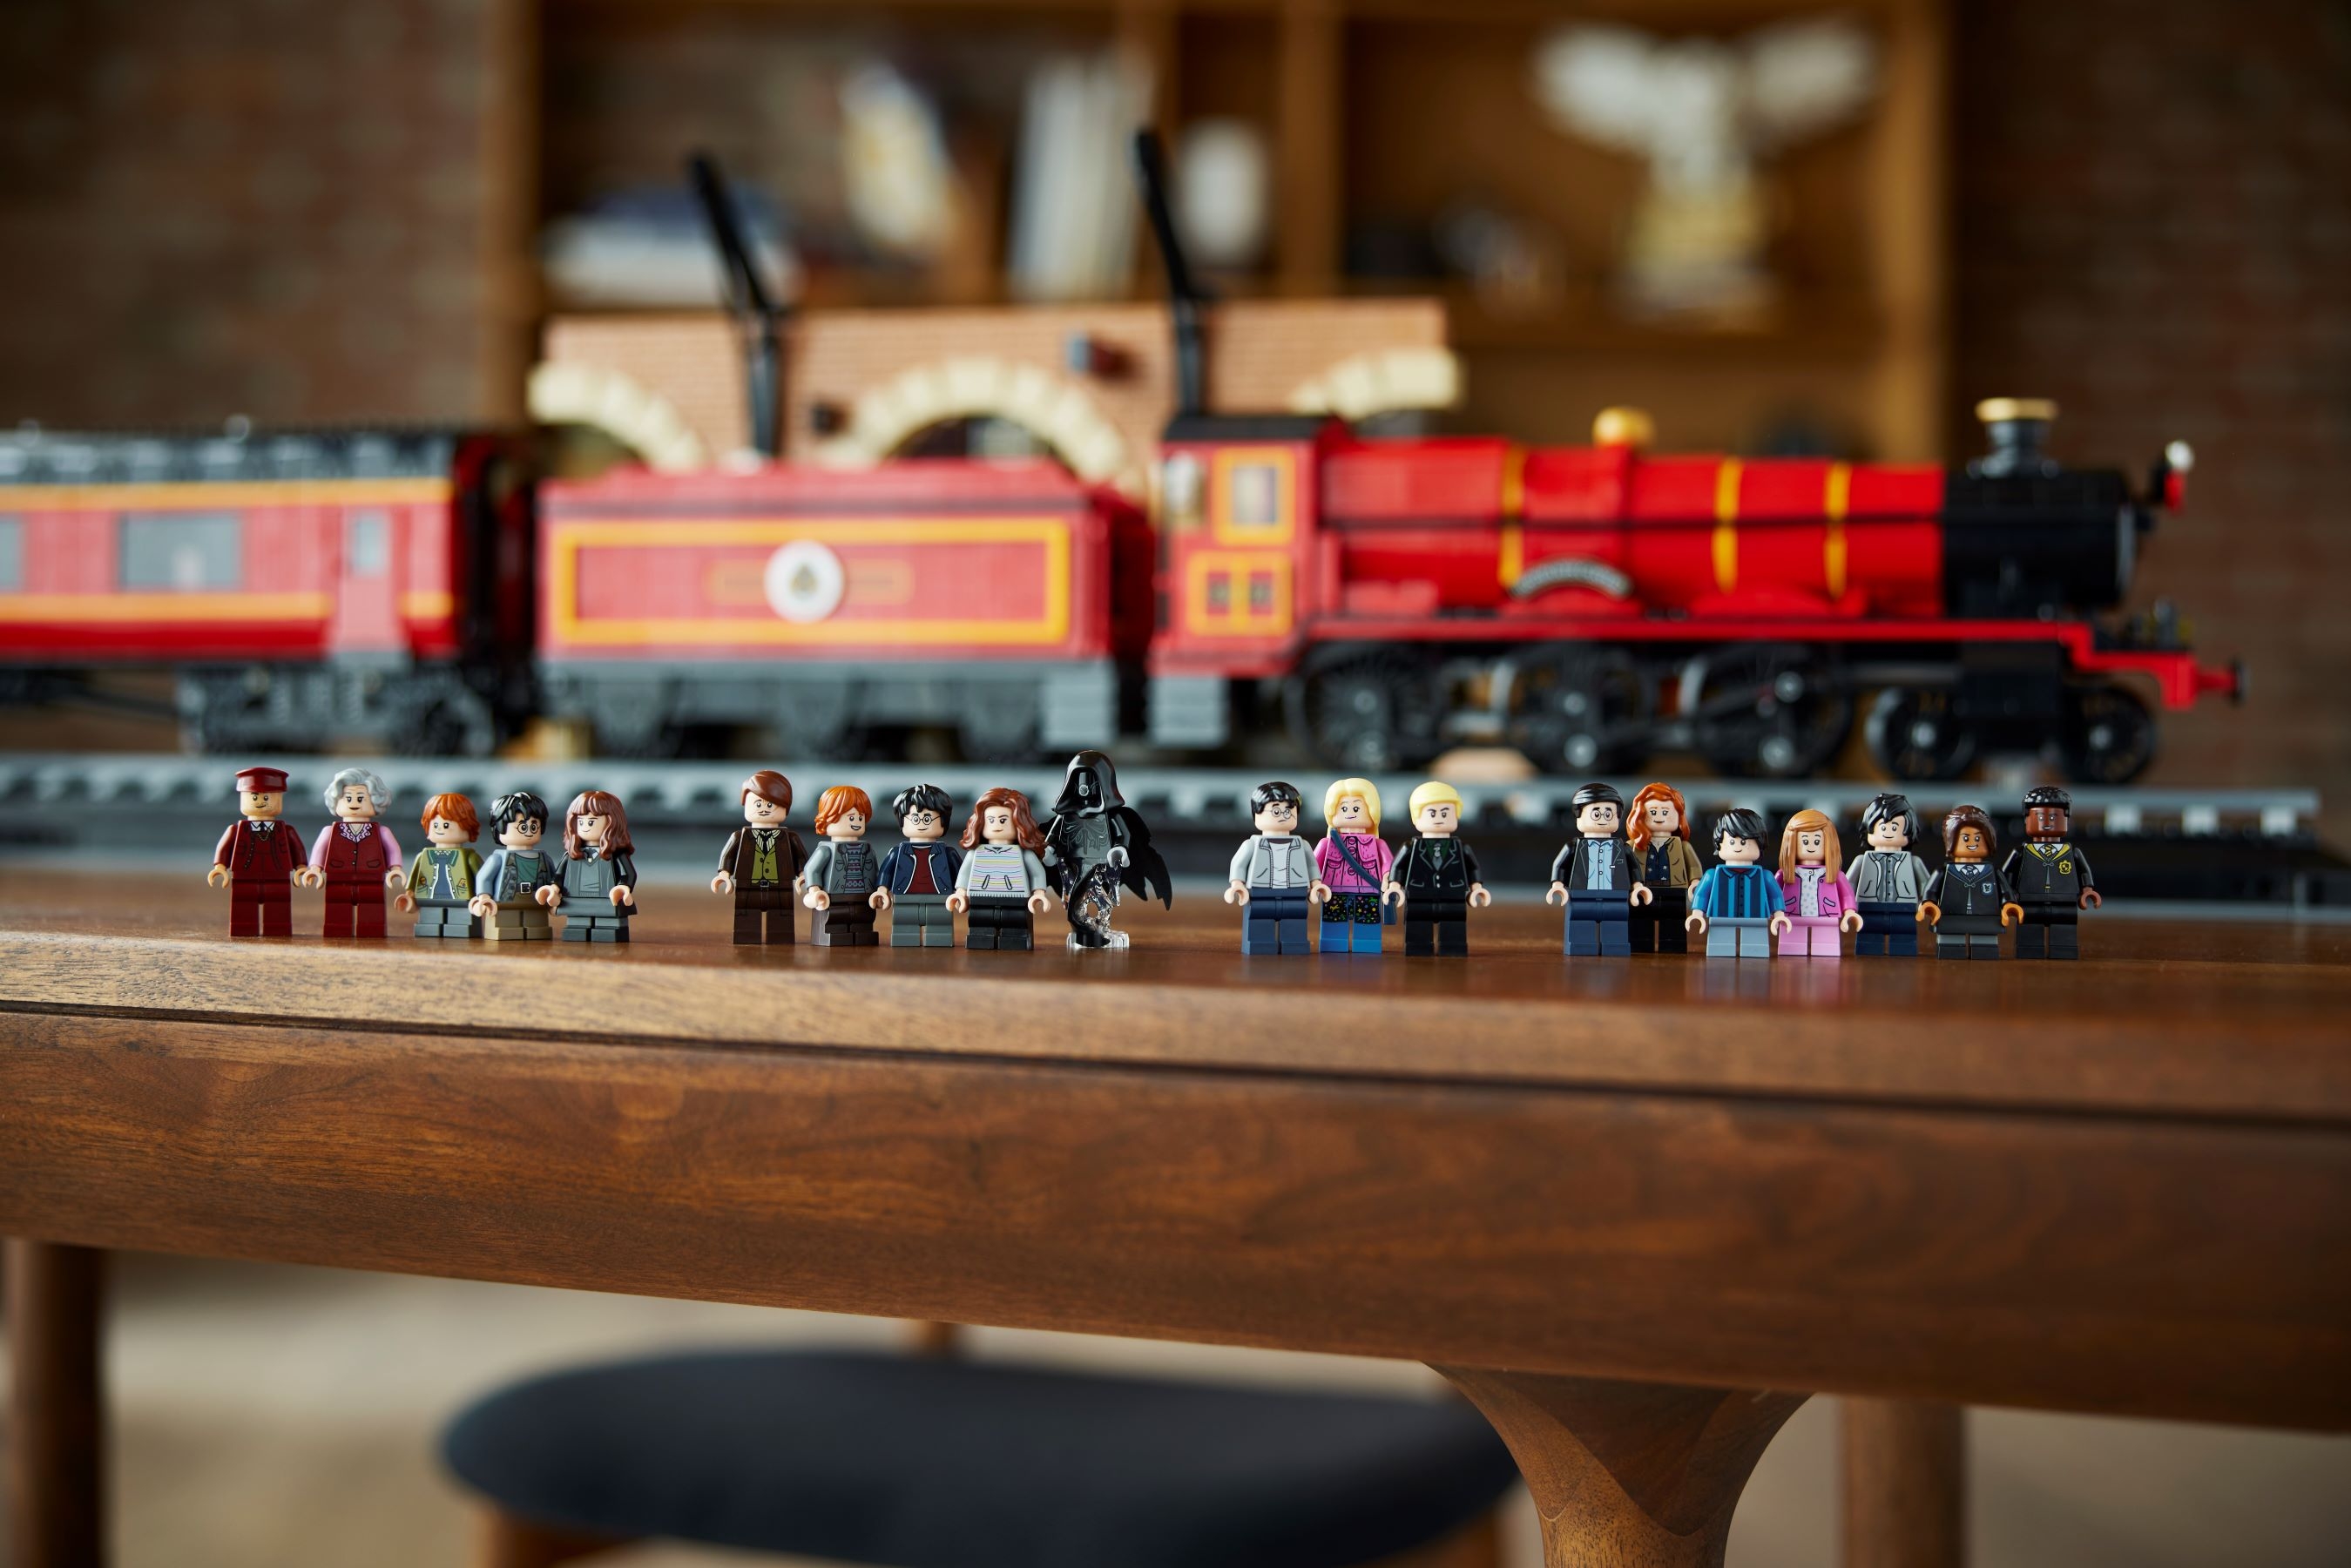 Hogwarts Express ™ Train Set with Hogsmeade Station™ 76423 | Harry Potter™  | Buy online at the Official LEGO® Shop US